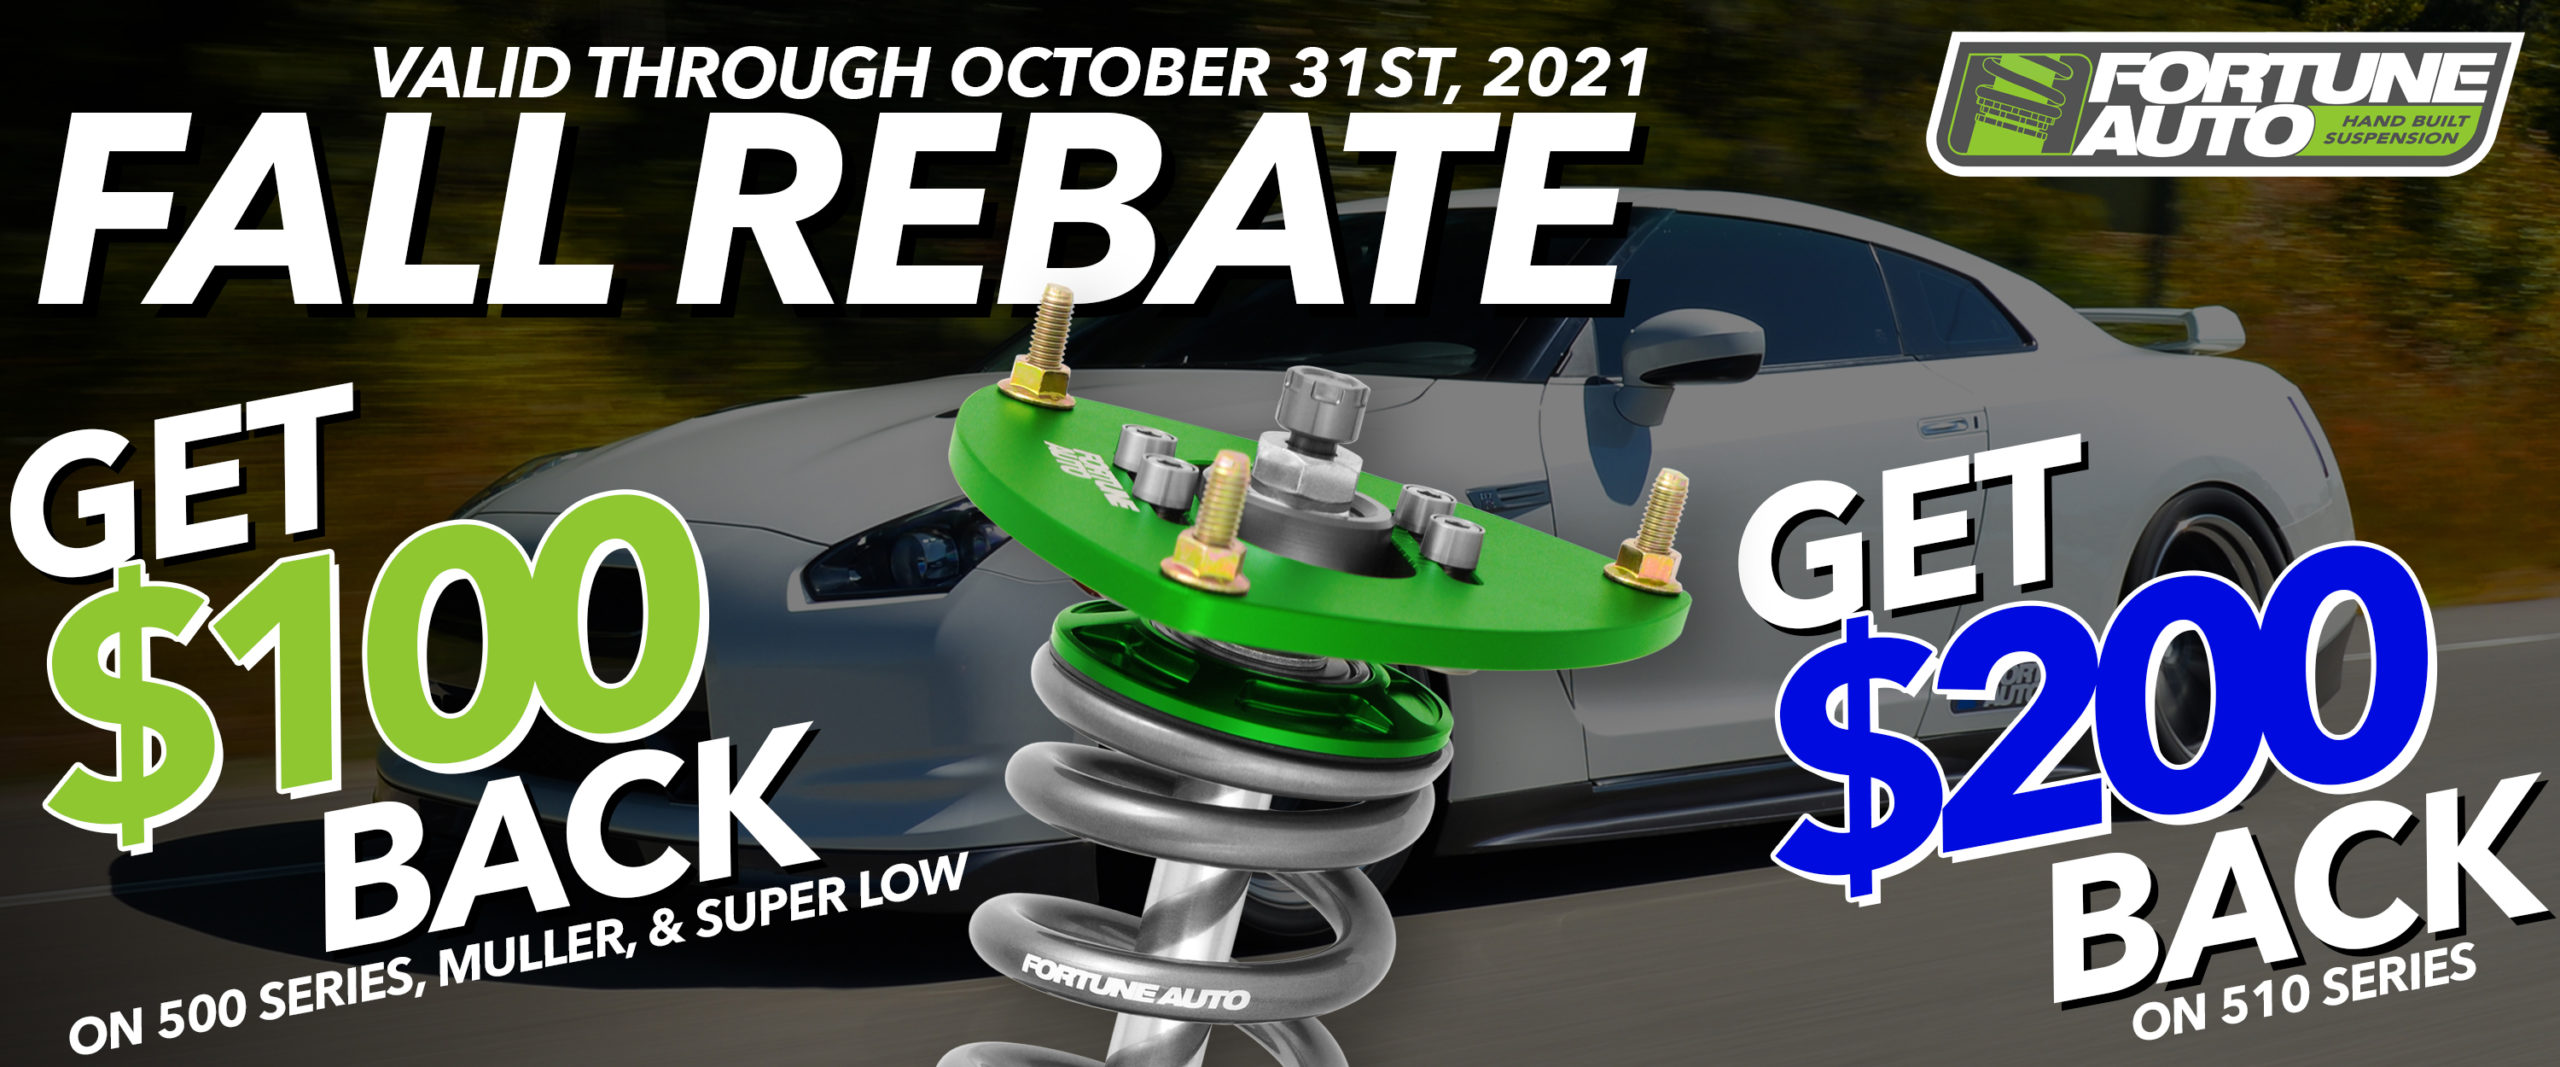 Fall-Rebate-2021-Web-5 copy